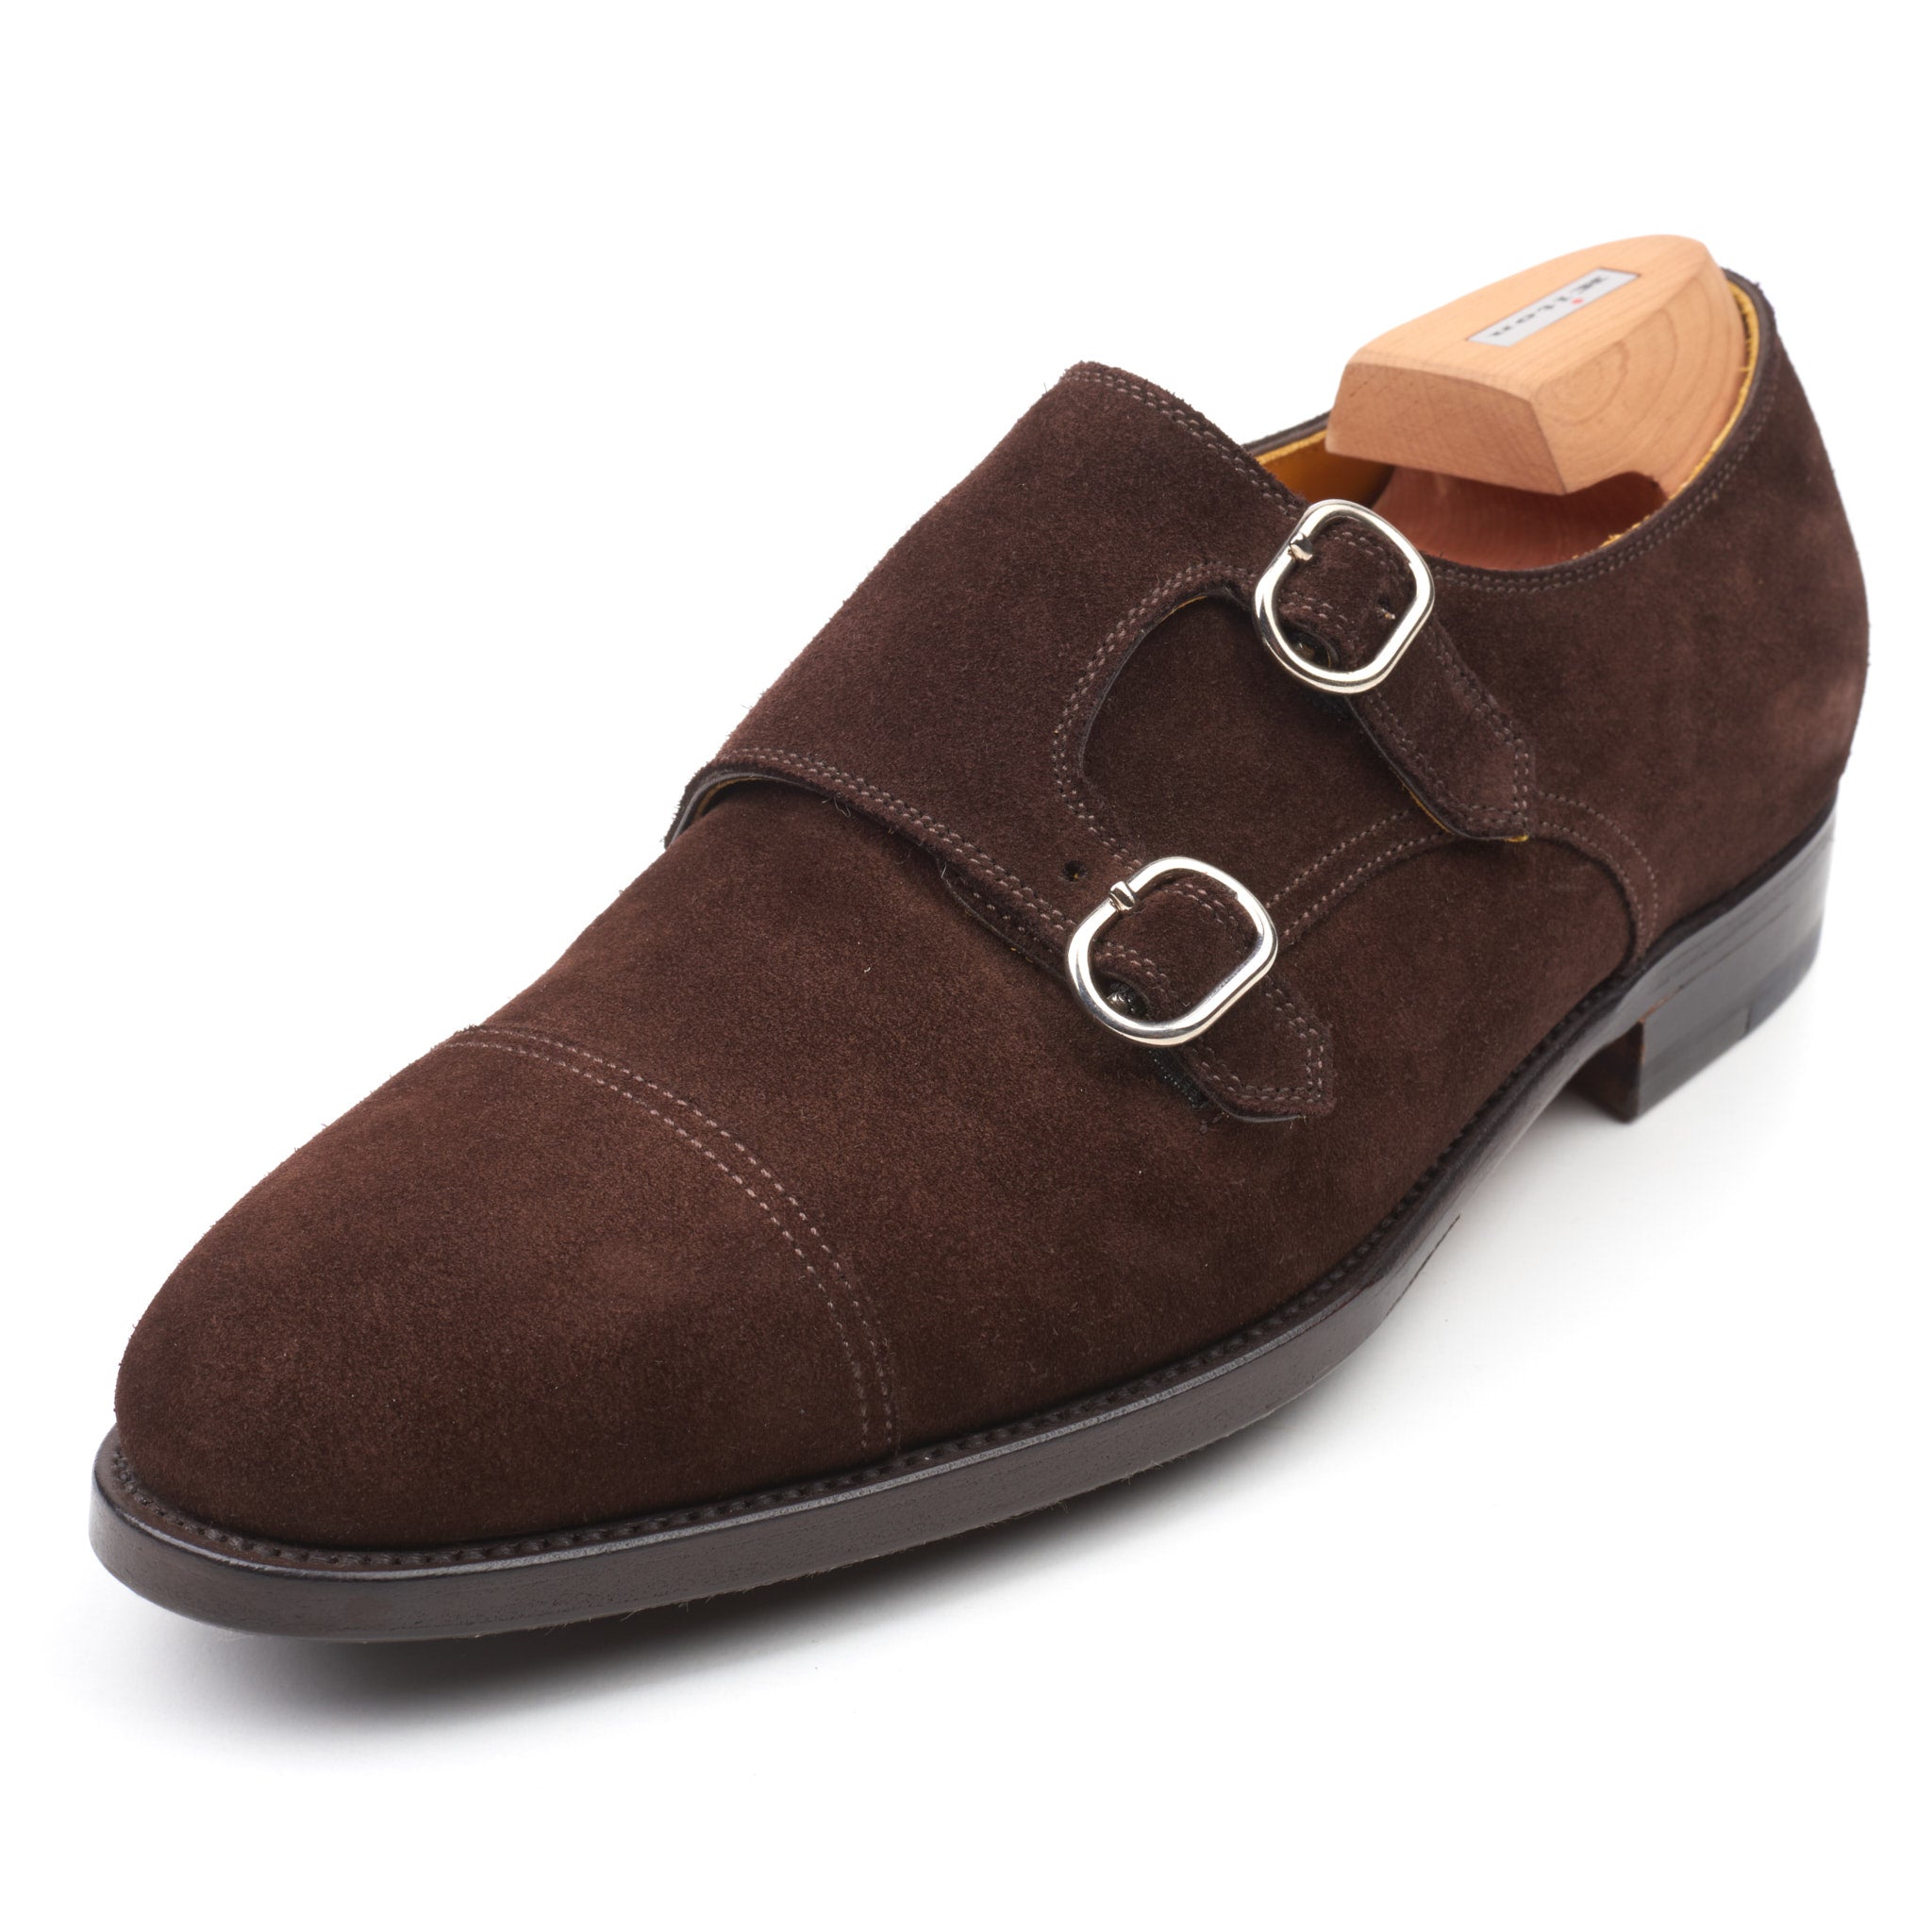 KITON Napoli Handmade Brown Calfskin Suede Leather Double Monk Shoes US 9.5 NEW KITON